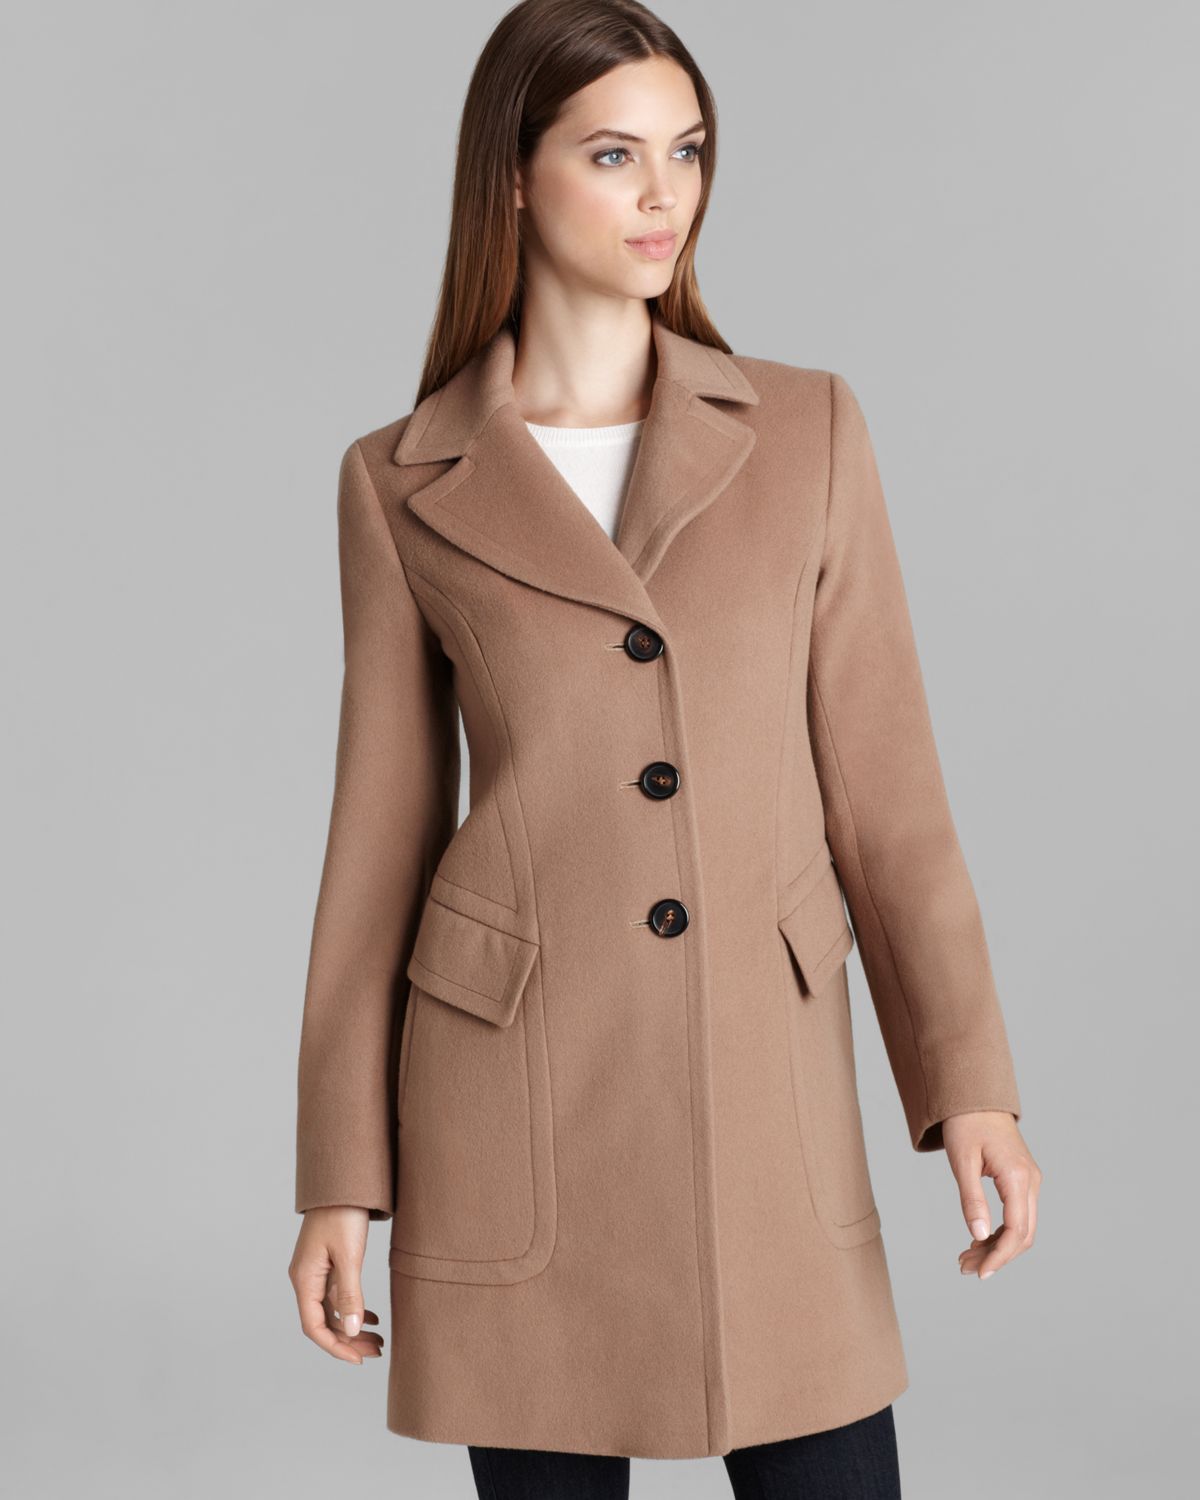 fleurette carmelo coat wool notch collar seam detail product 1 12441987 254826320